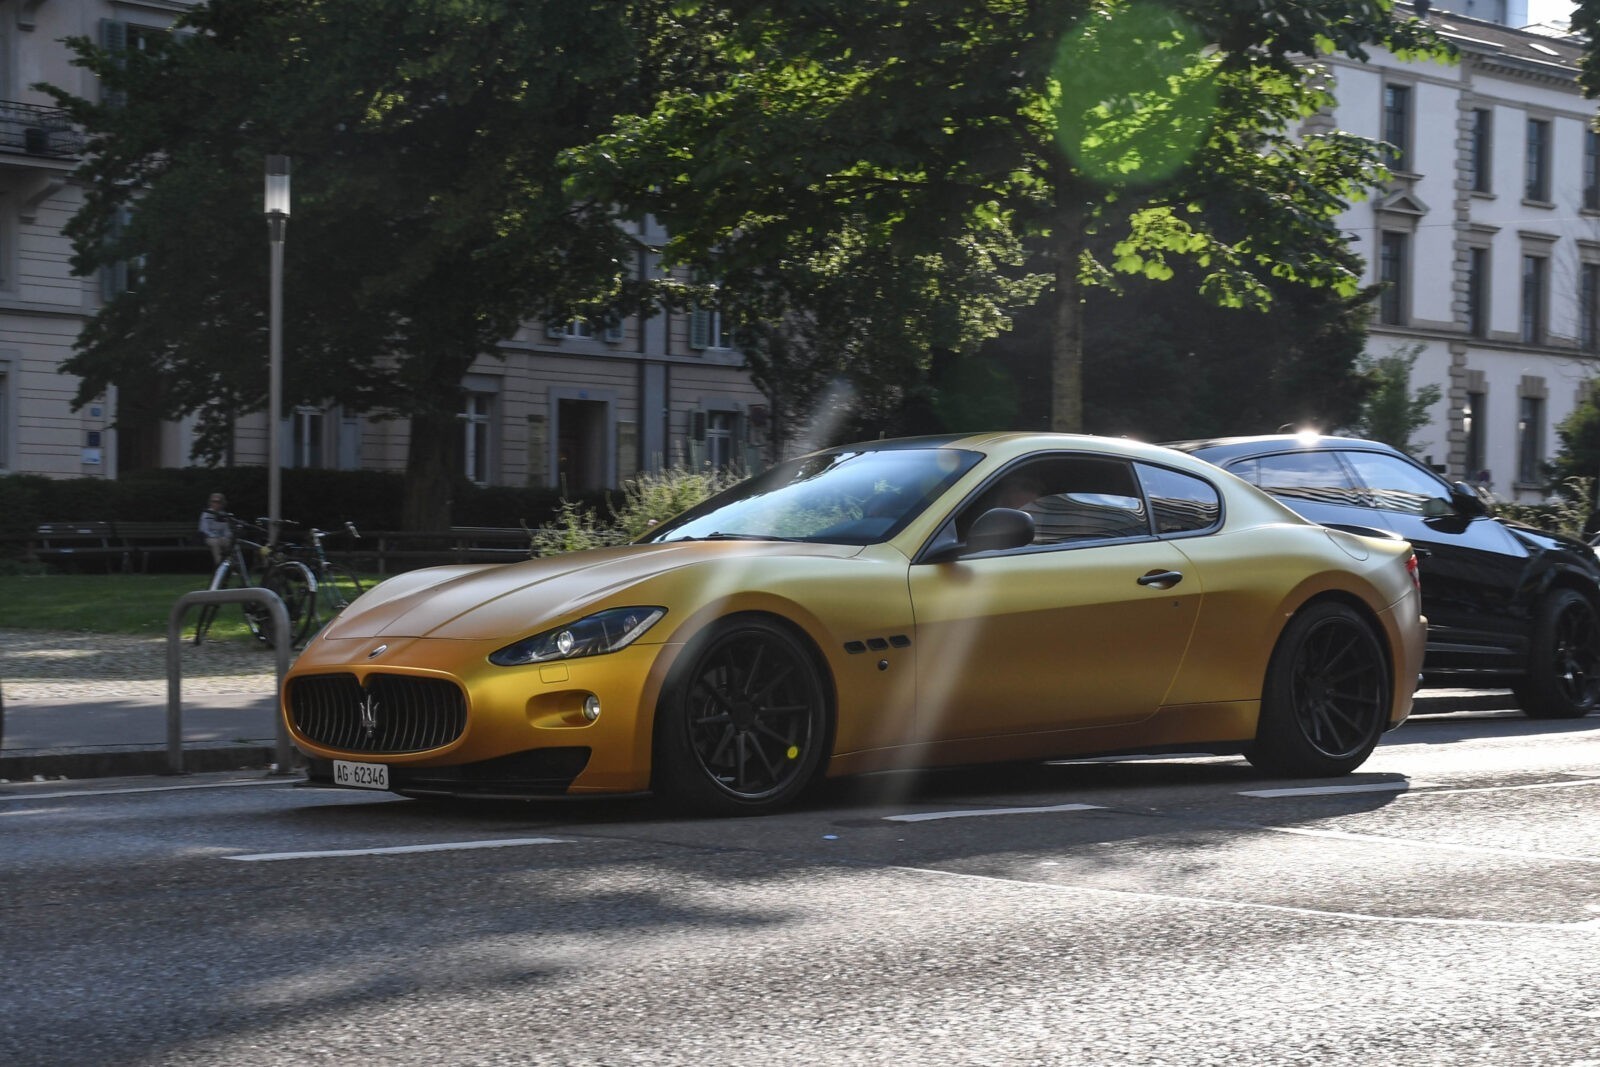 Maserati Granturismo Sport Gespot Op Autoblog Nl